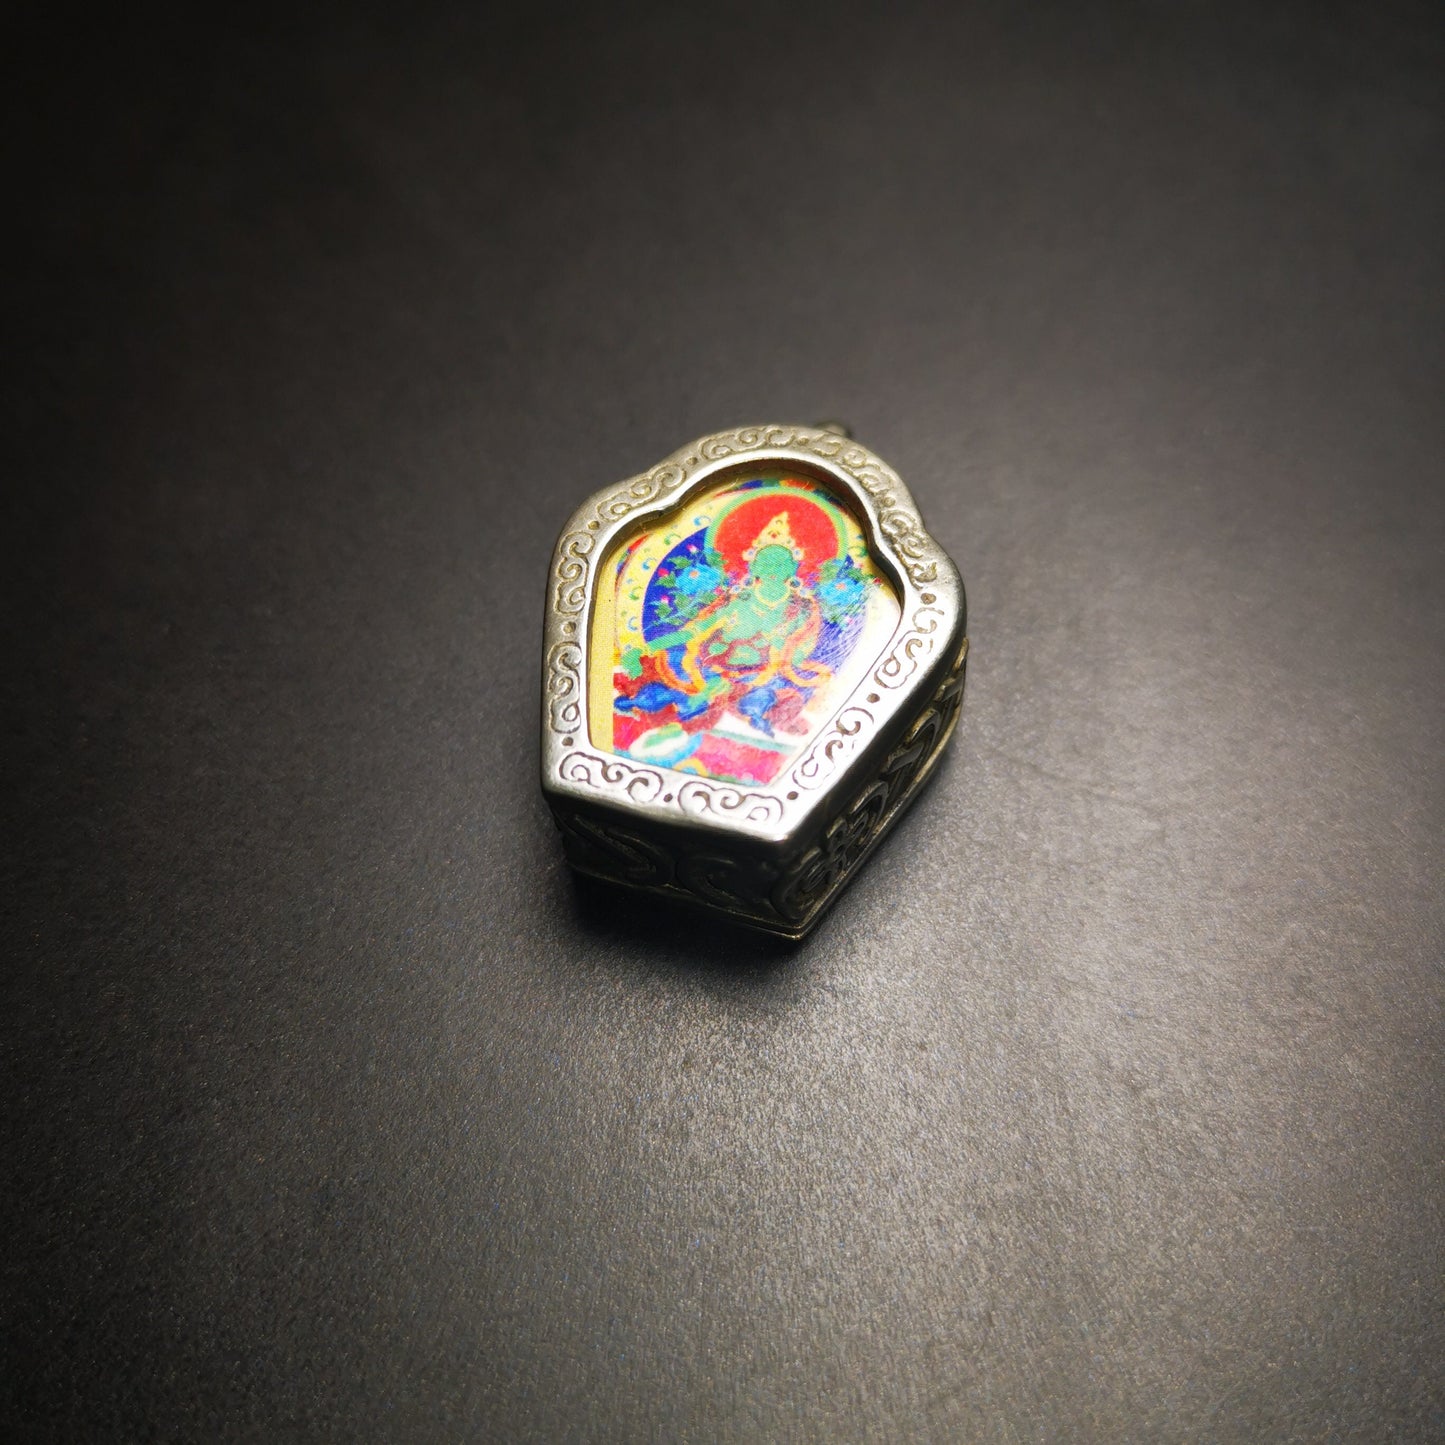 Gandhanra Antique Handmade Gau Ghau Shrine, Mini Tibetan Buddhist Altar Amulet Pendant,Made of White Copper